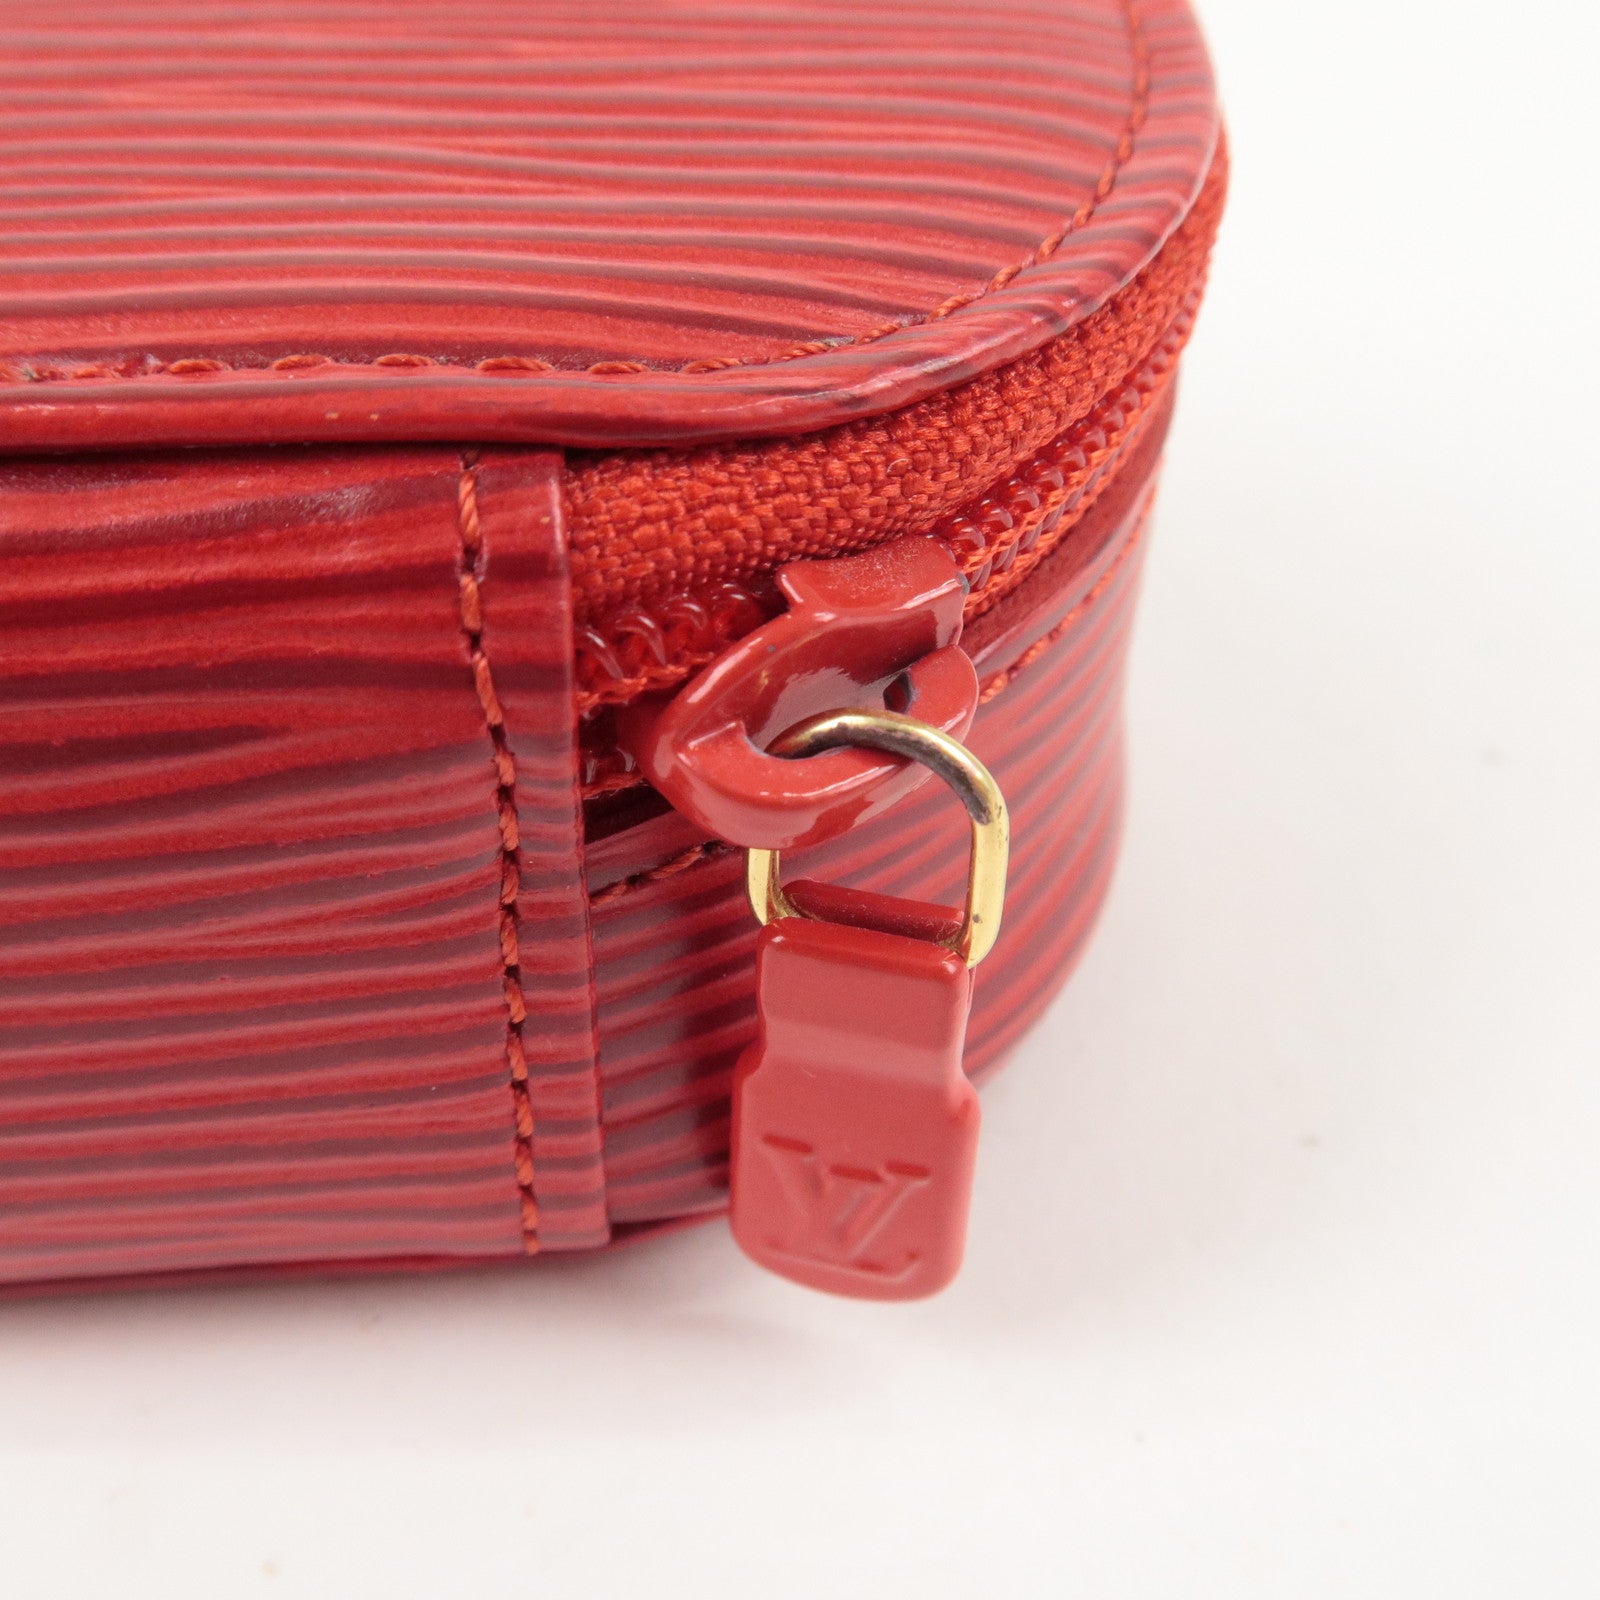 Louis Vuitton Red Epi Leather Jewelry Case Louis Vuitton